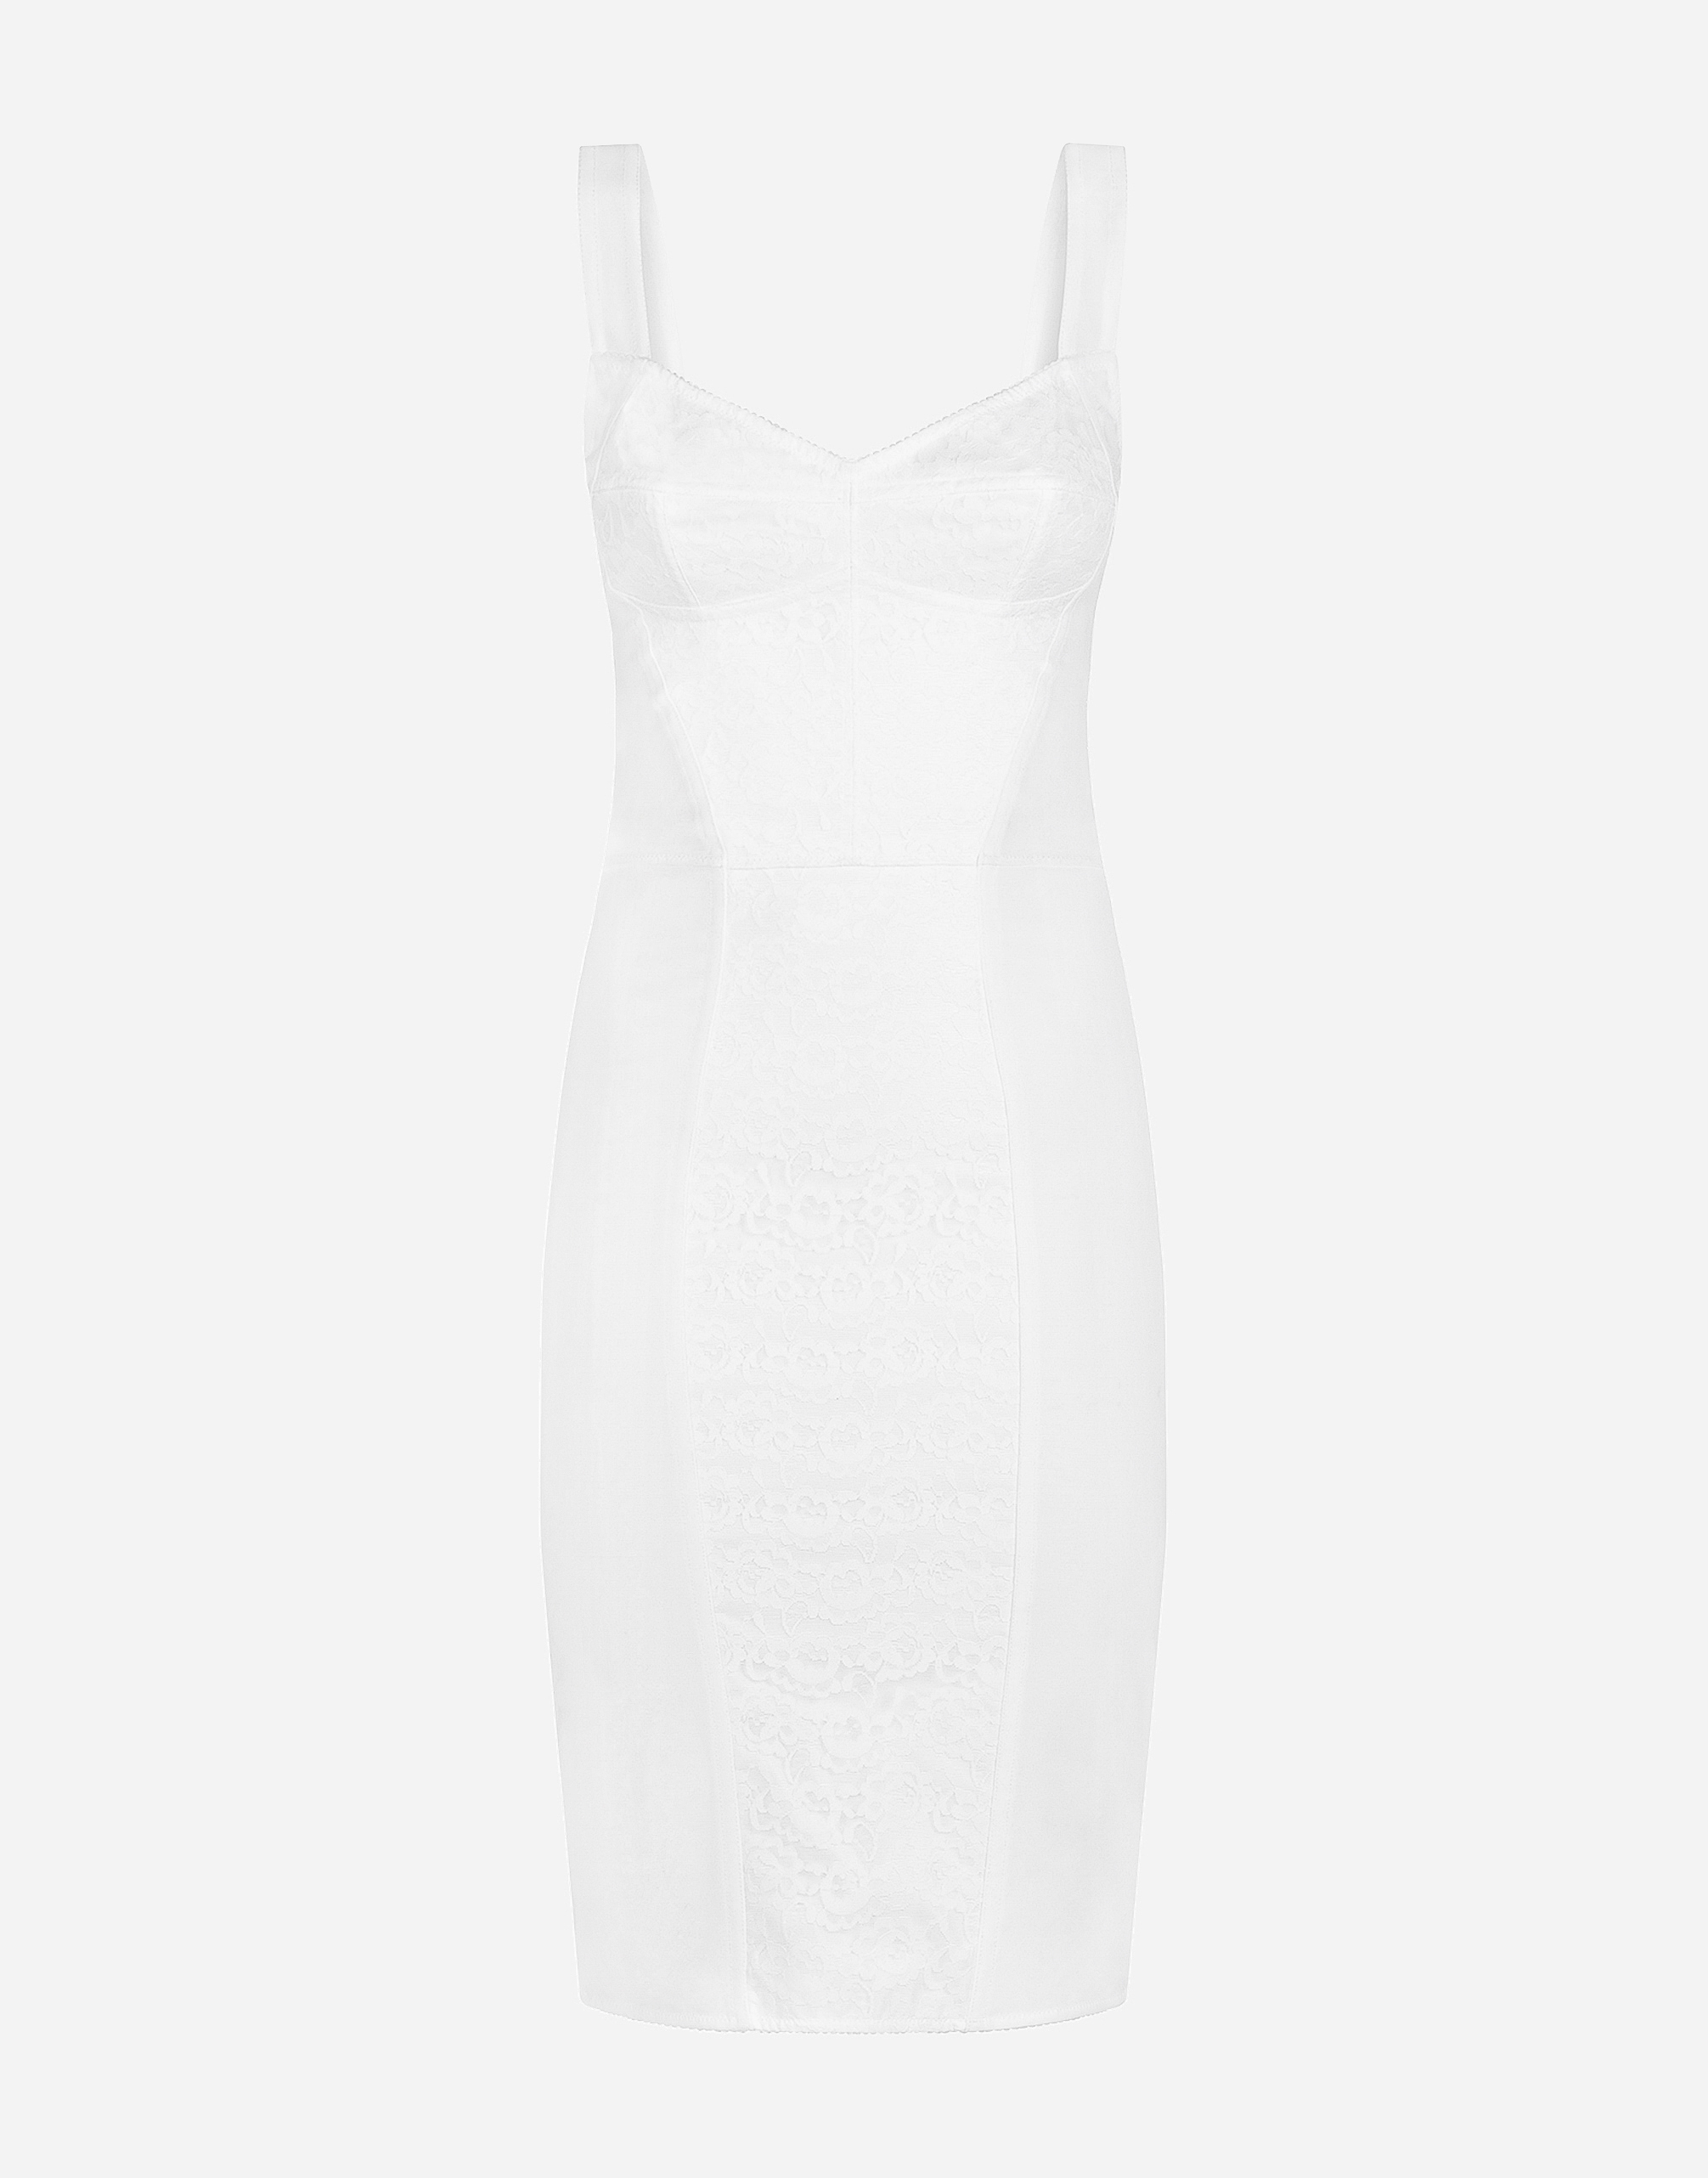 Corset bustier dress in White